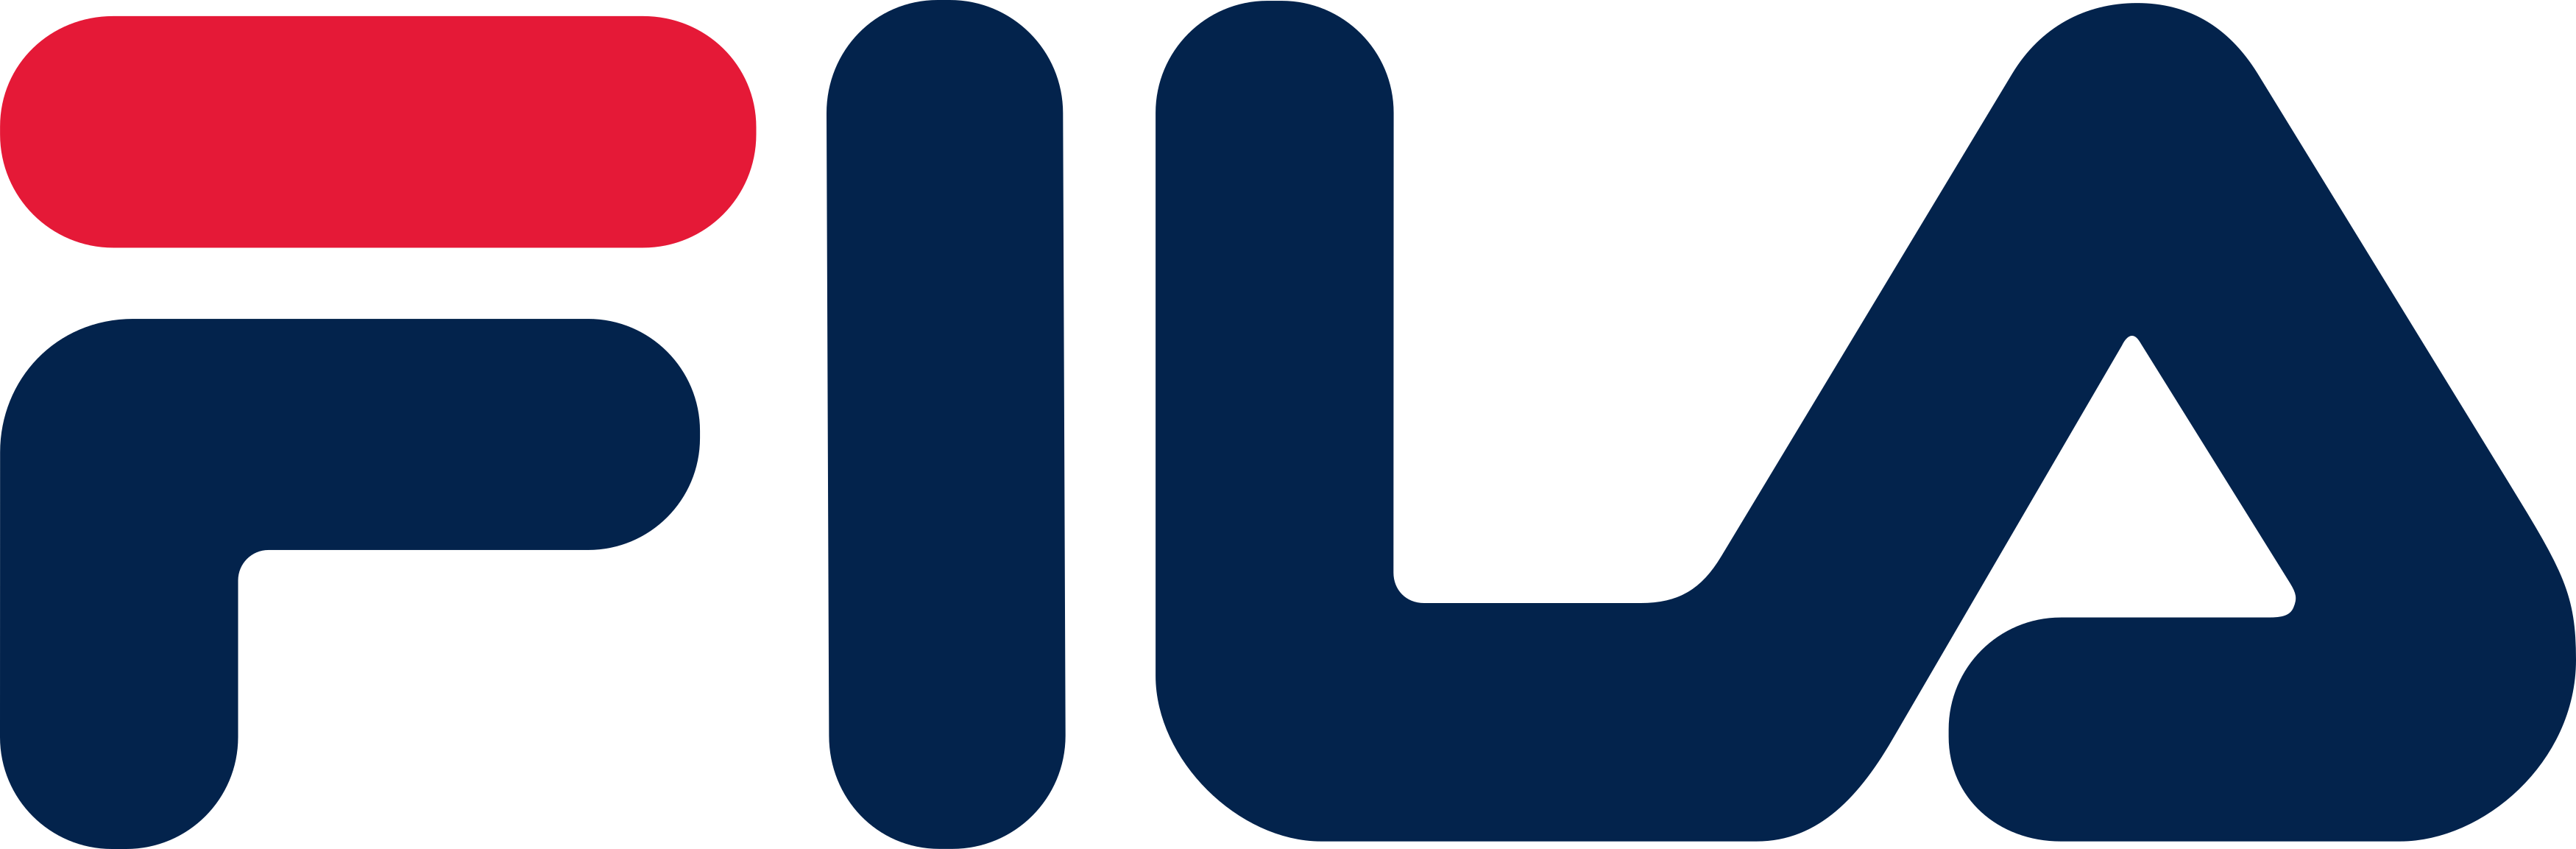 Fila Logo.